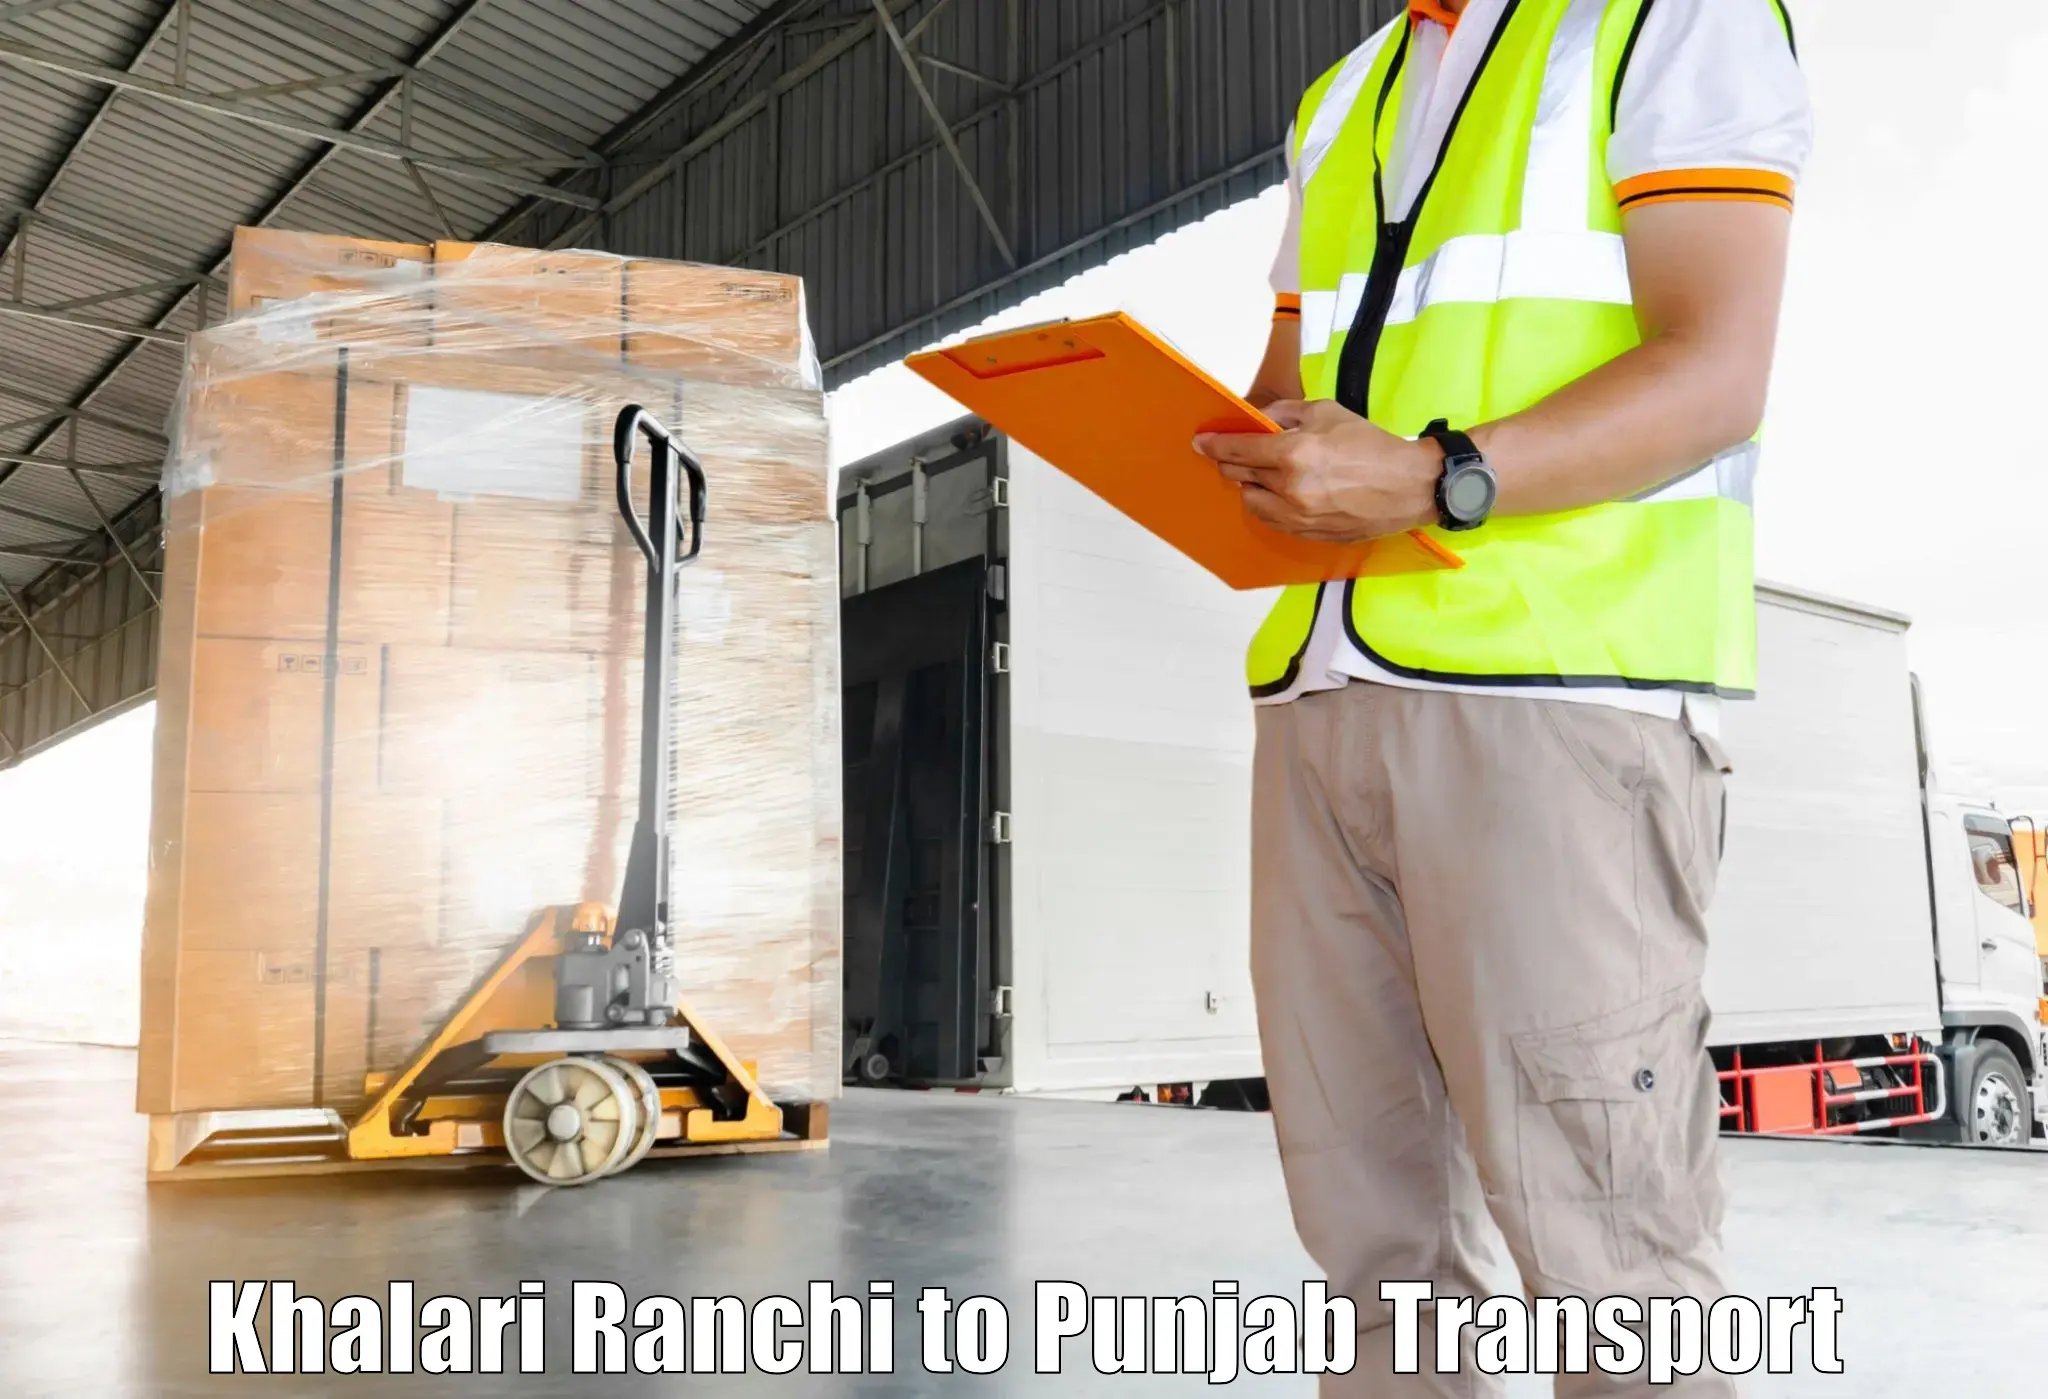 Truck transport companies in India Khalari Ranchi to Kapurthala